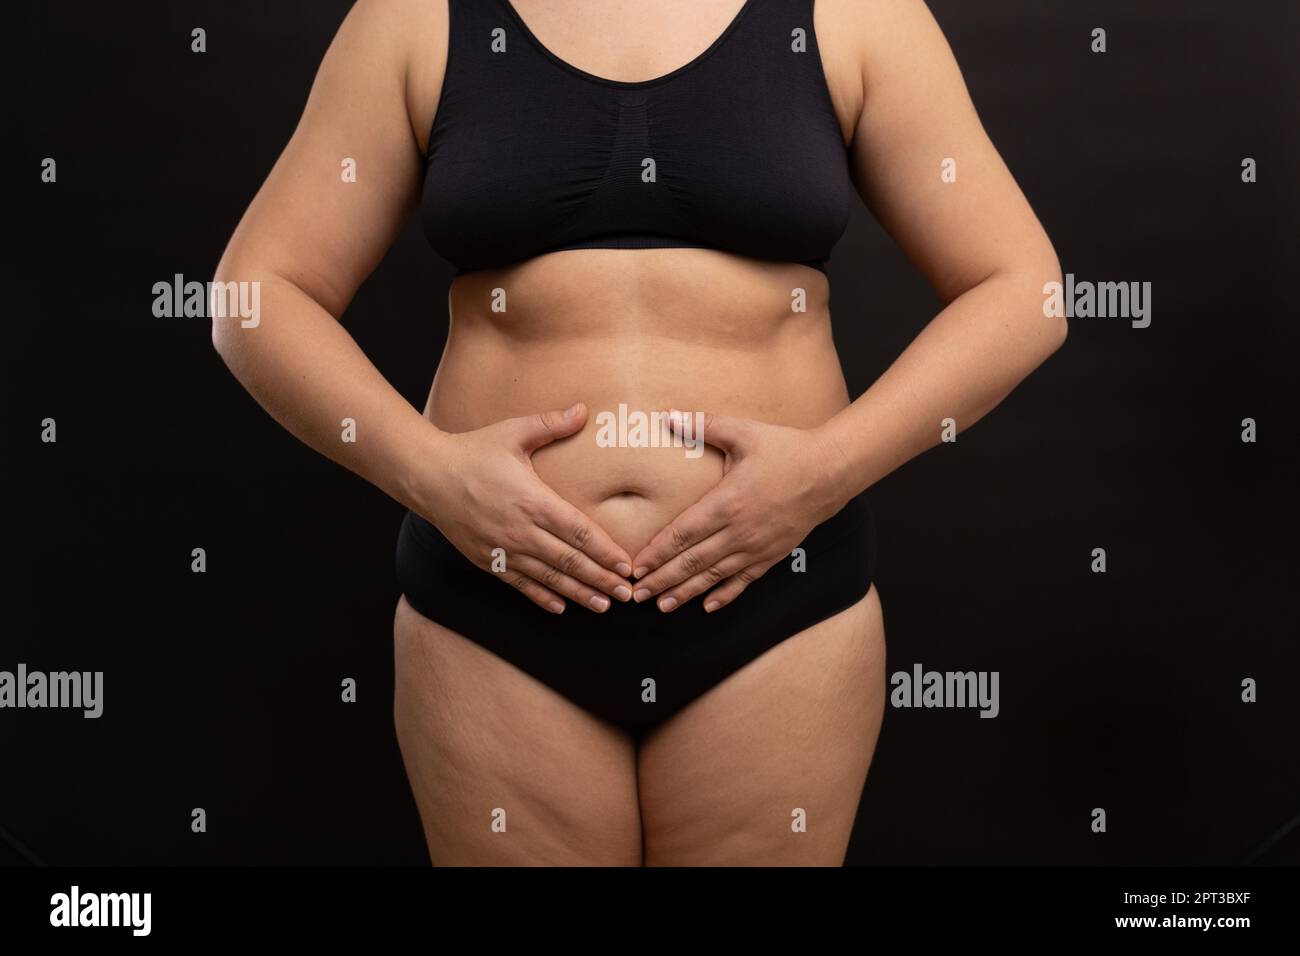 Fat woman in black underwear touch hanging belly. Flaunt figure